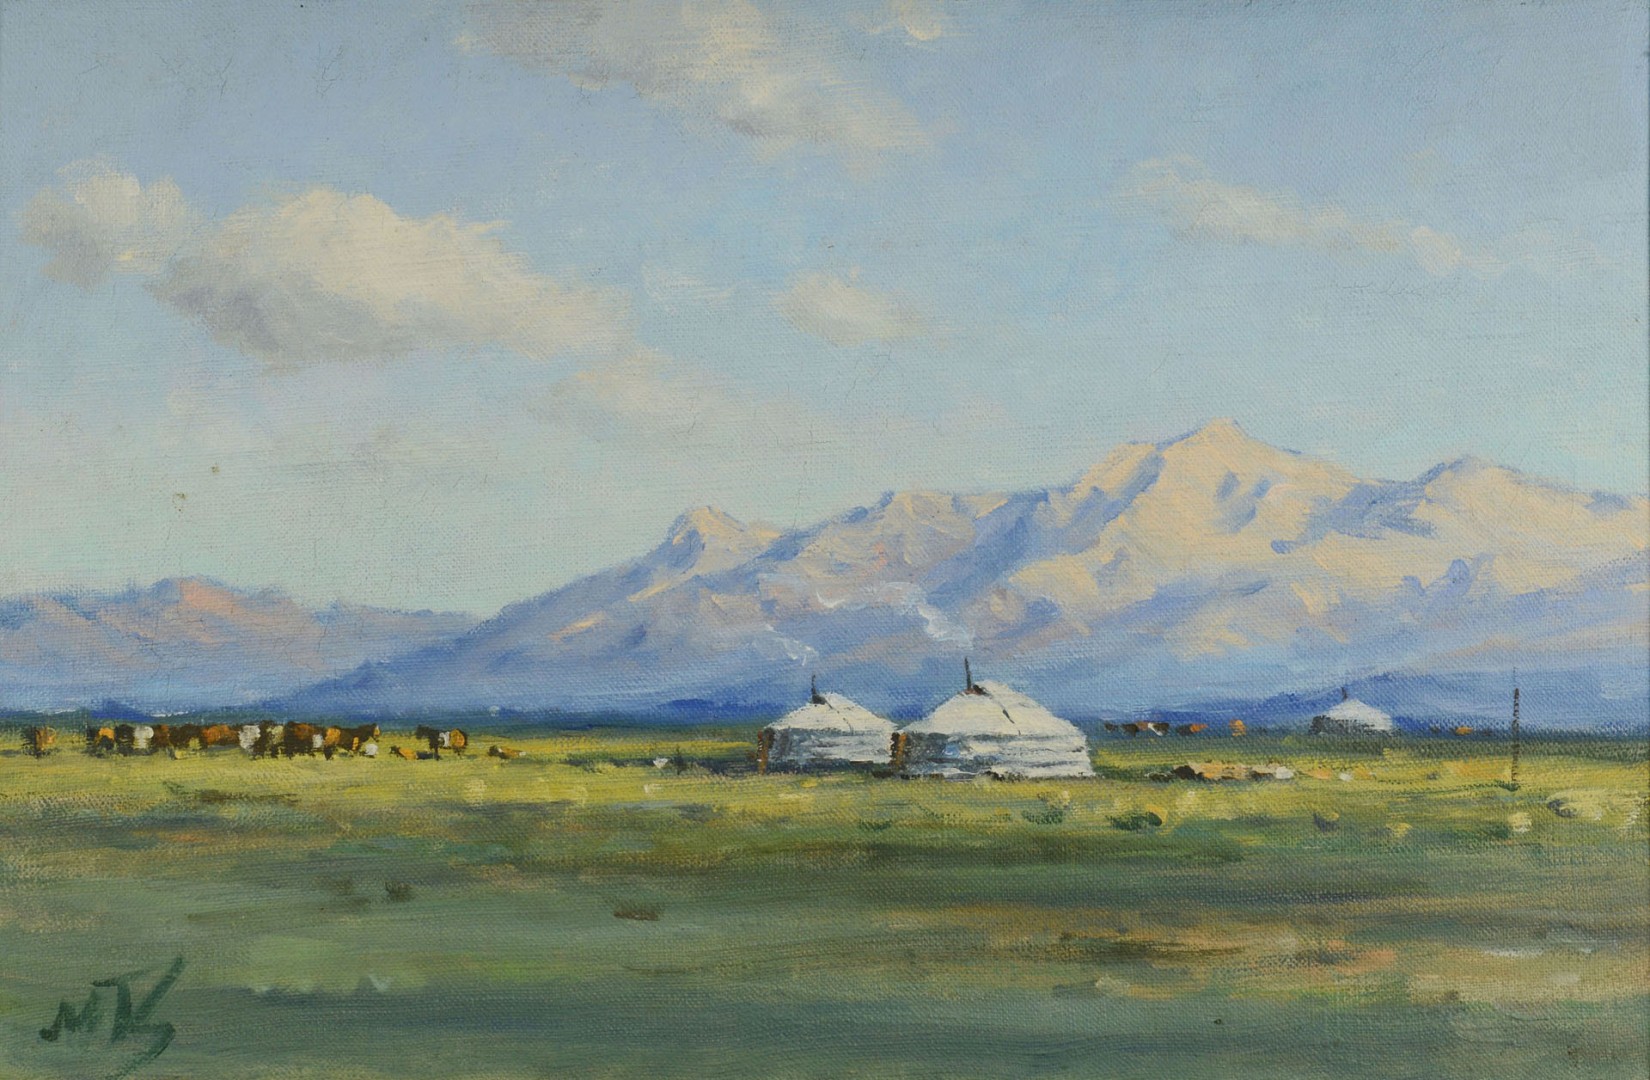 Lot 190: Southwestern or Mongolian Landscape Painting